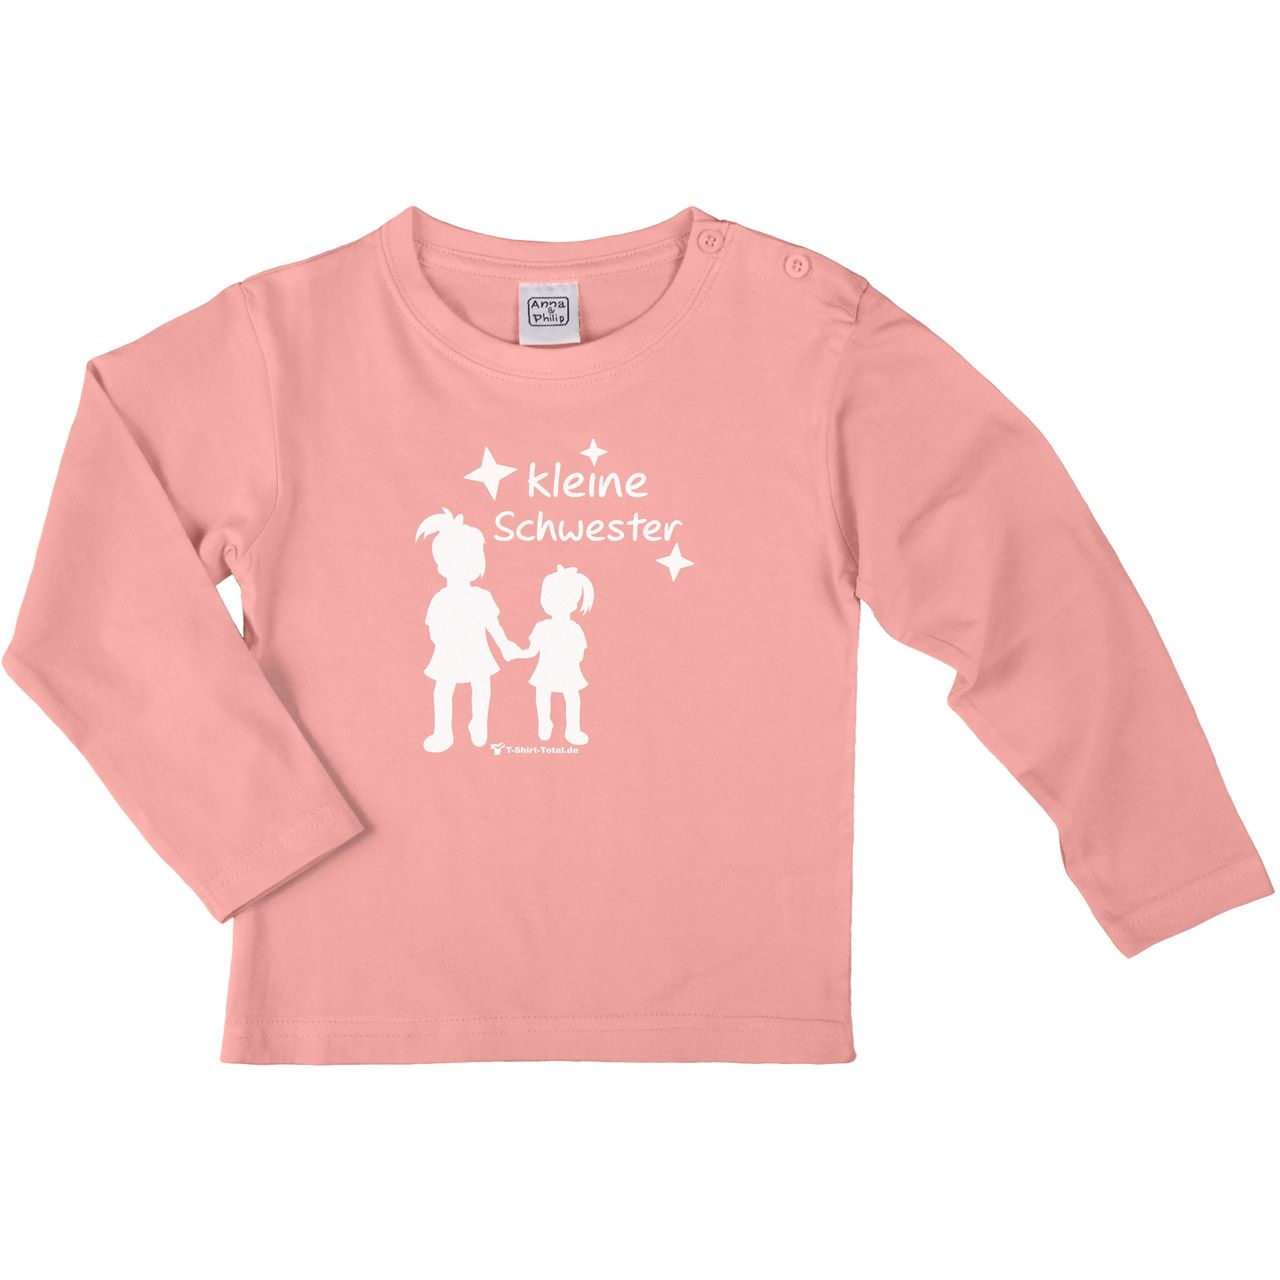 Kleine Schwester MM Kinder Langarm Shirt rosa 104